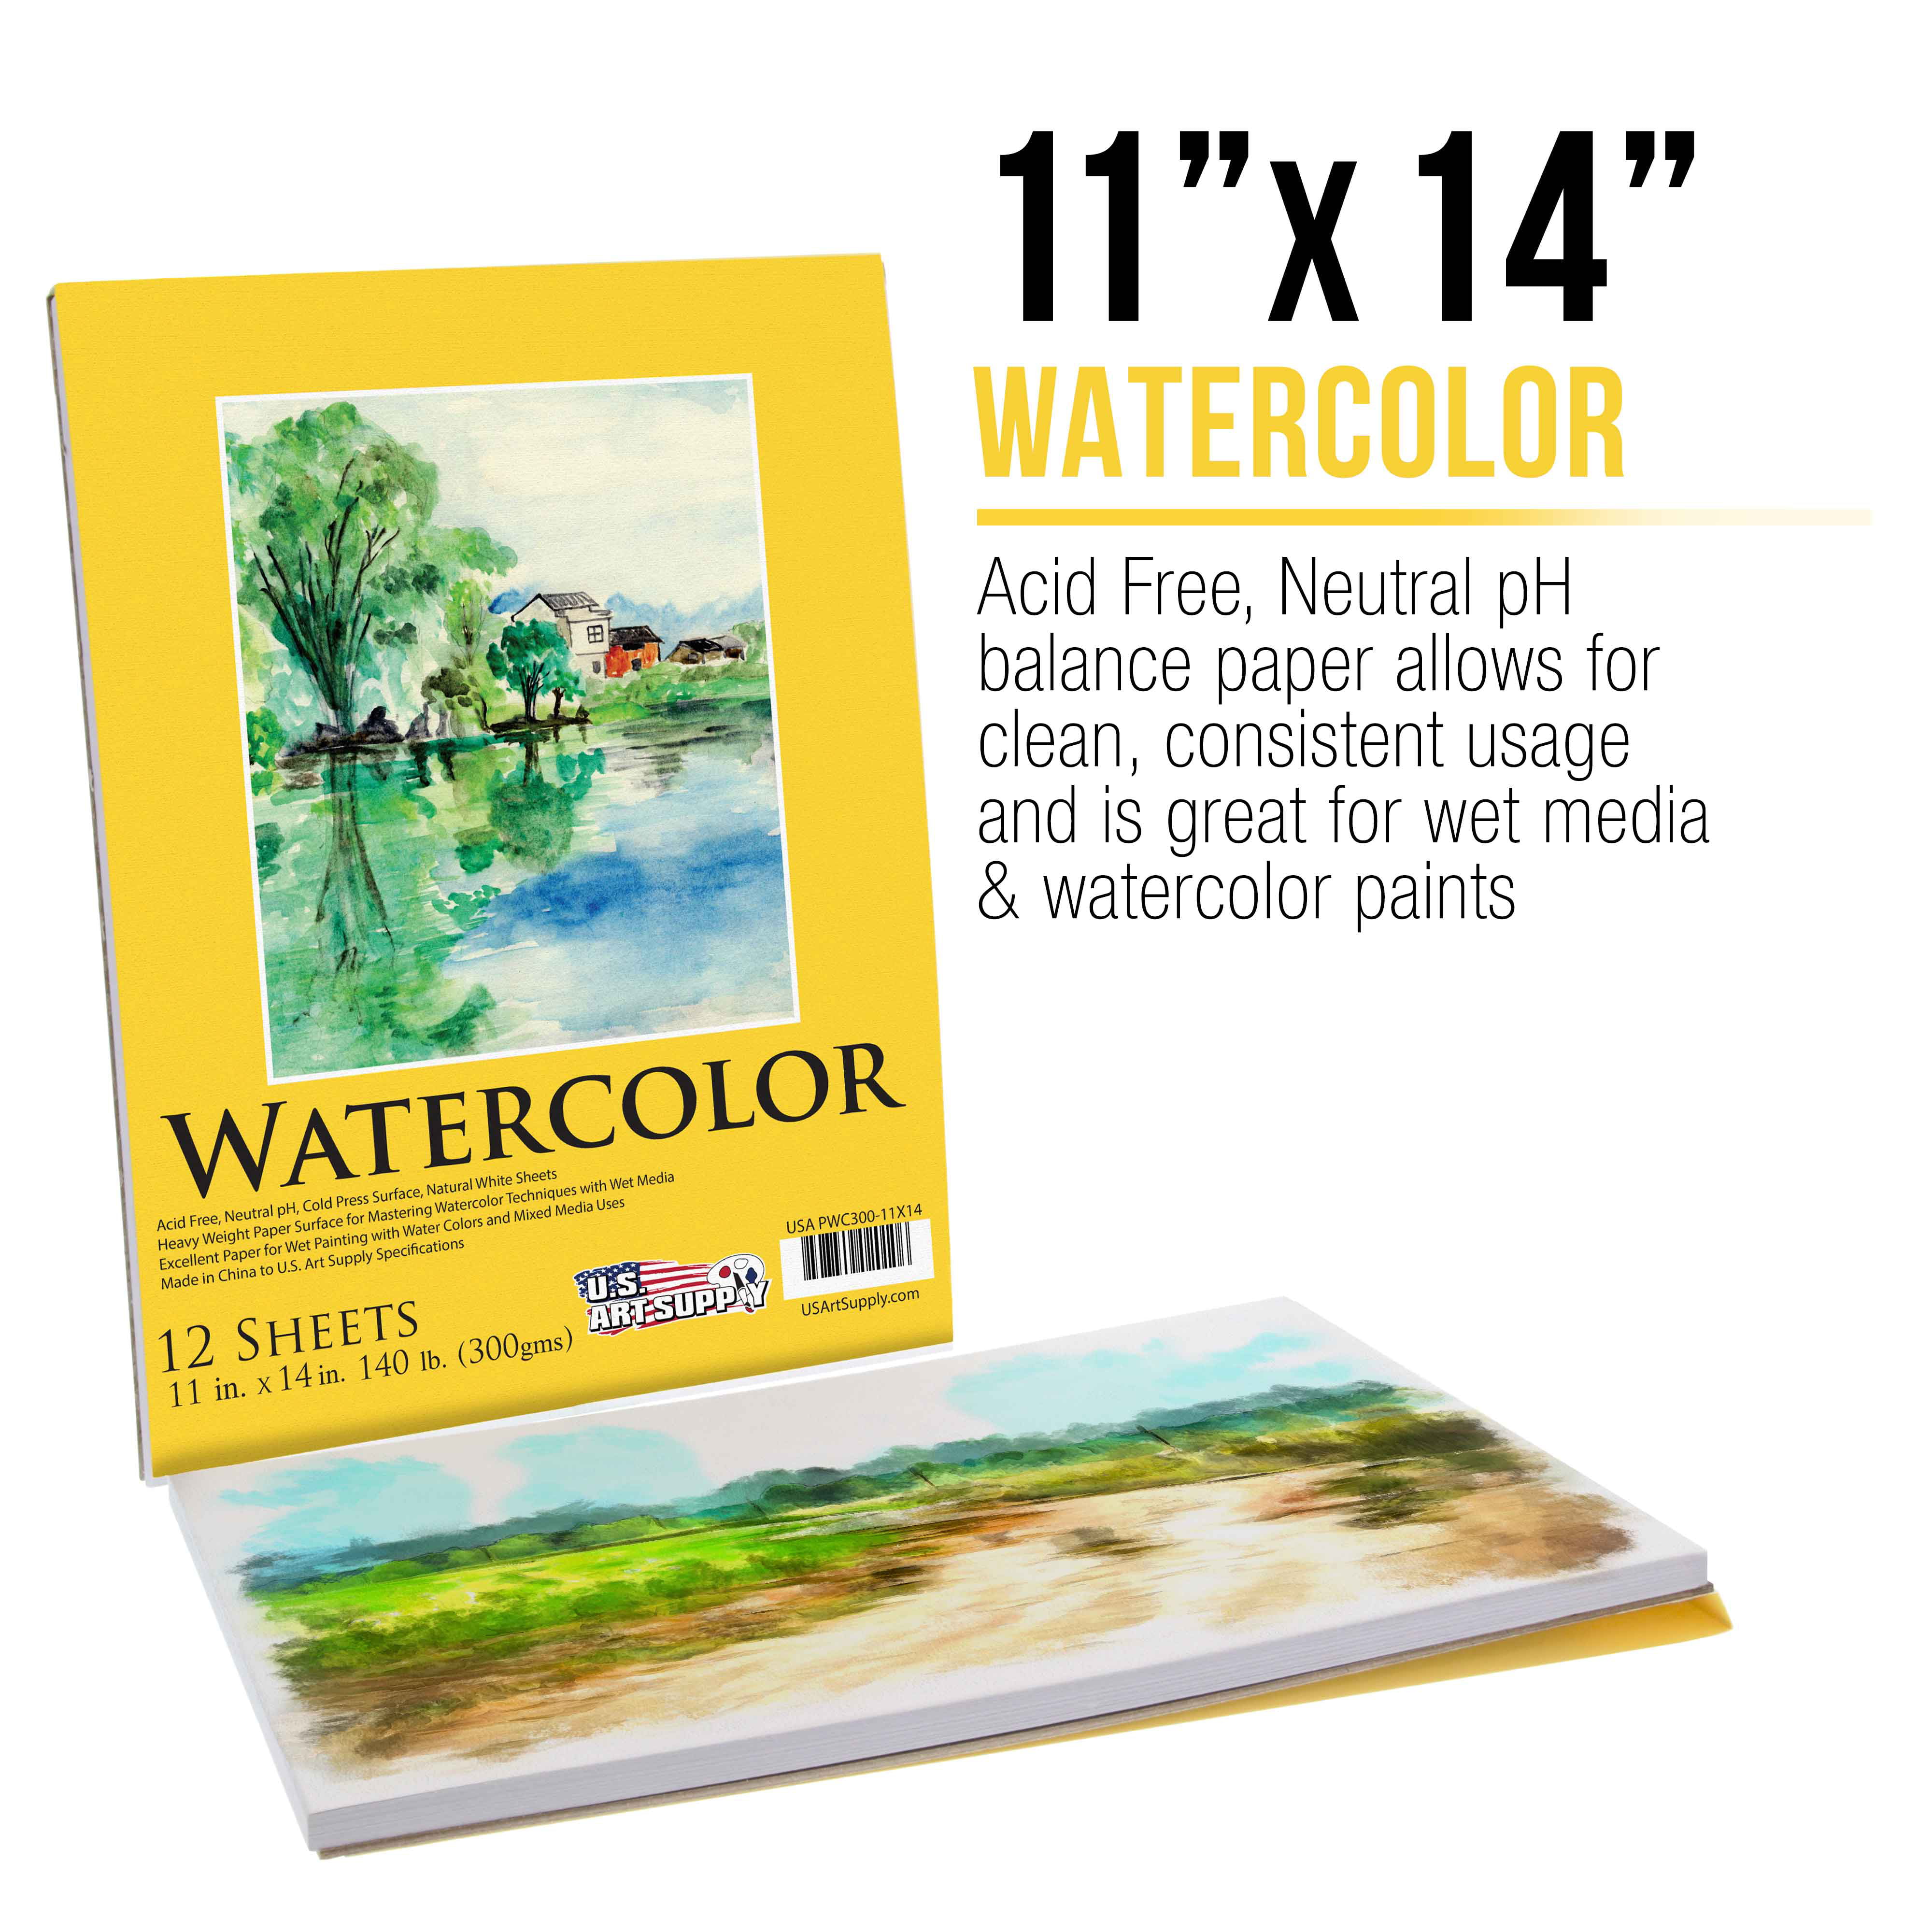 AEM Hi Arts 2 Pack, 30 Sheet, 11x15 Watercolor Paper Pad/Art